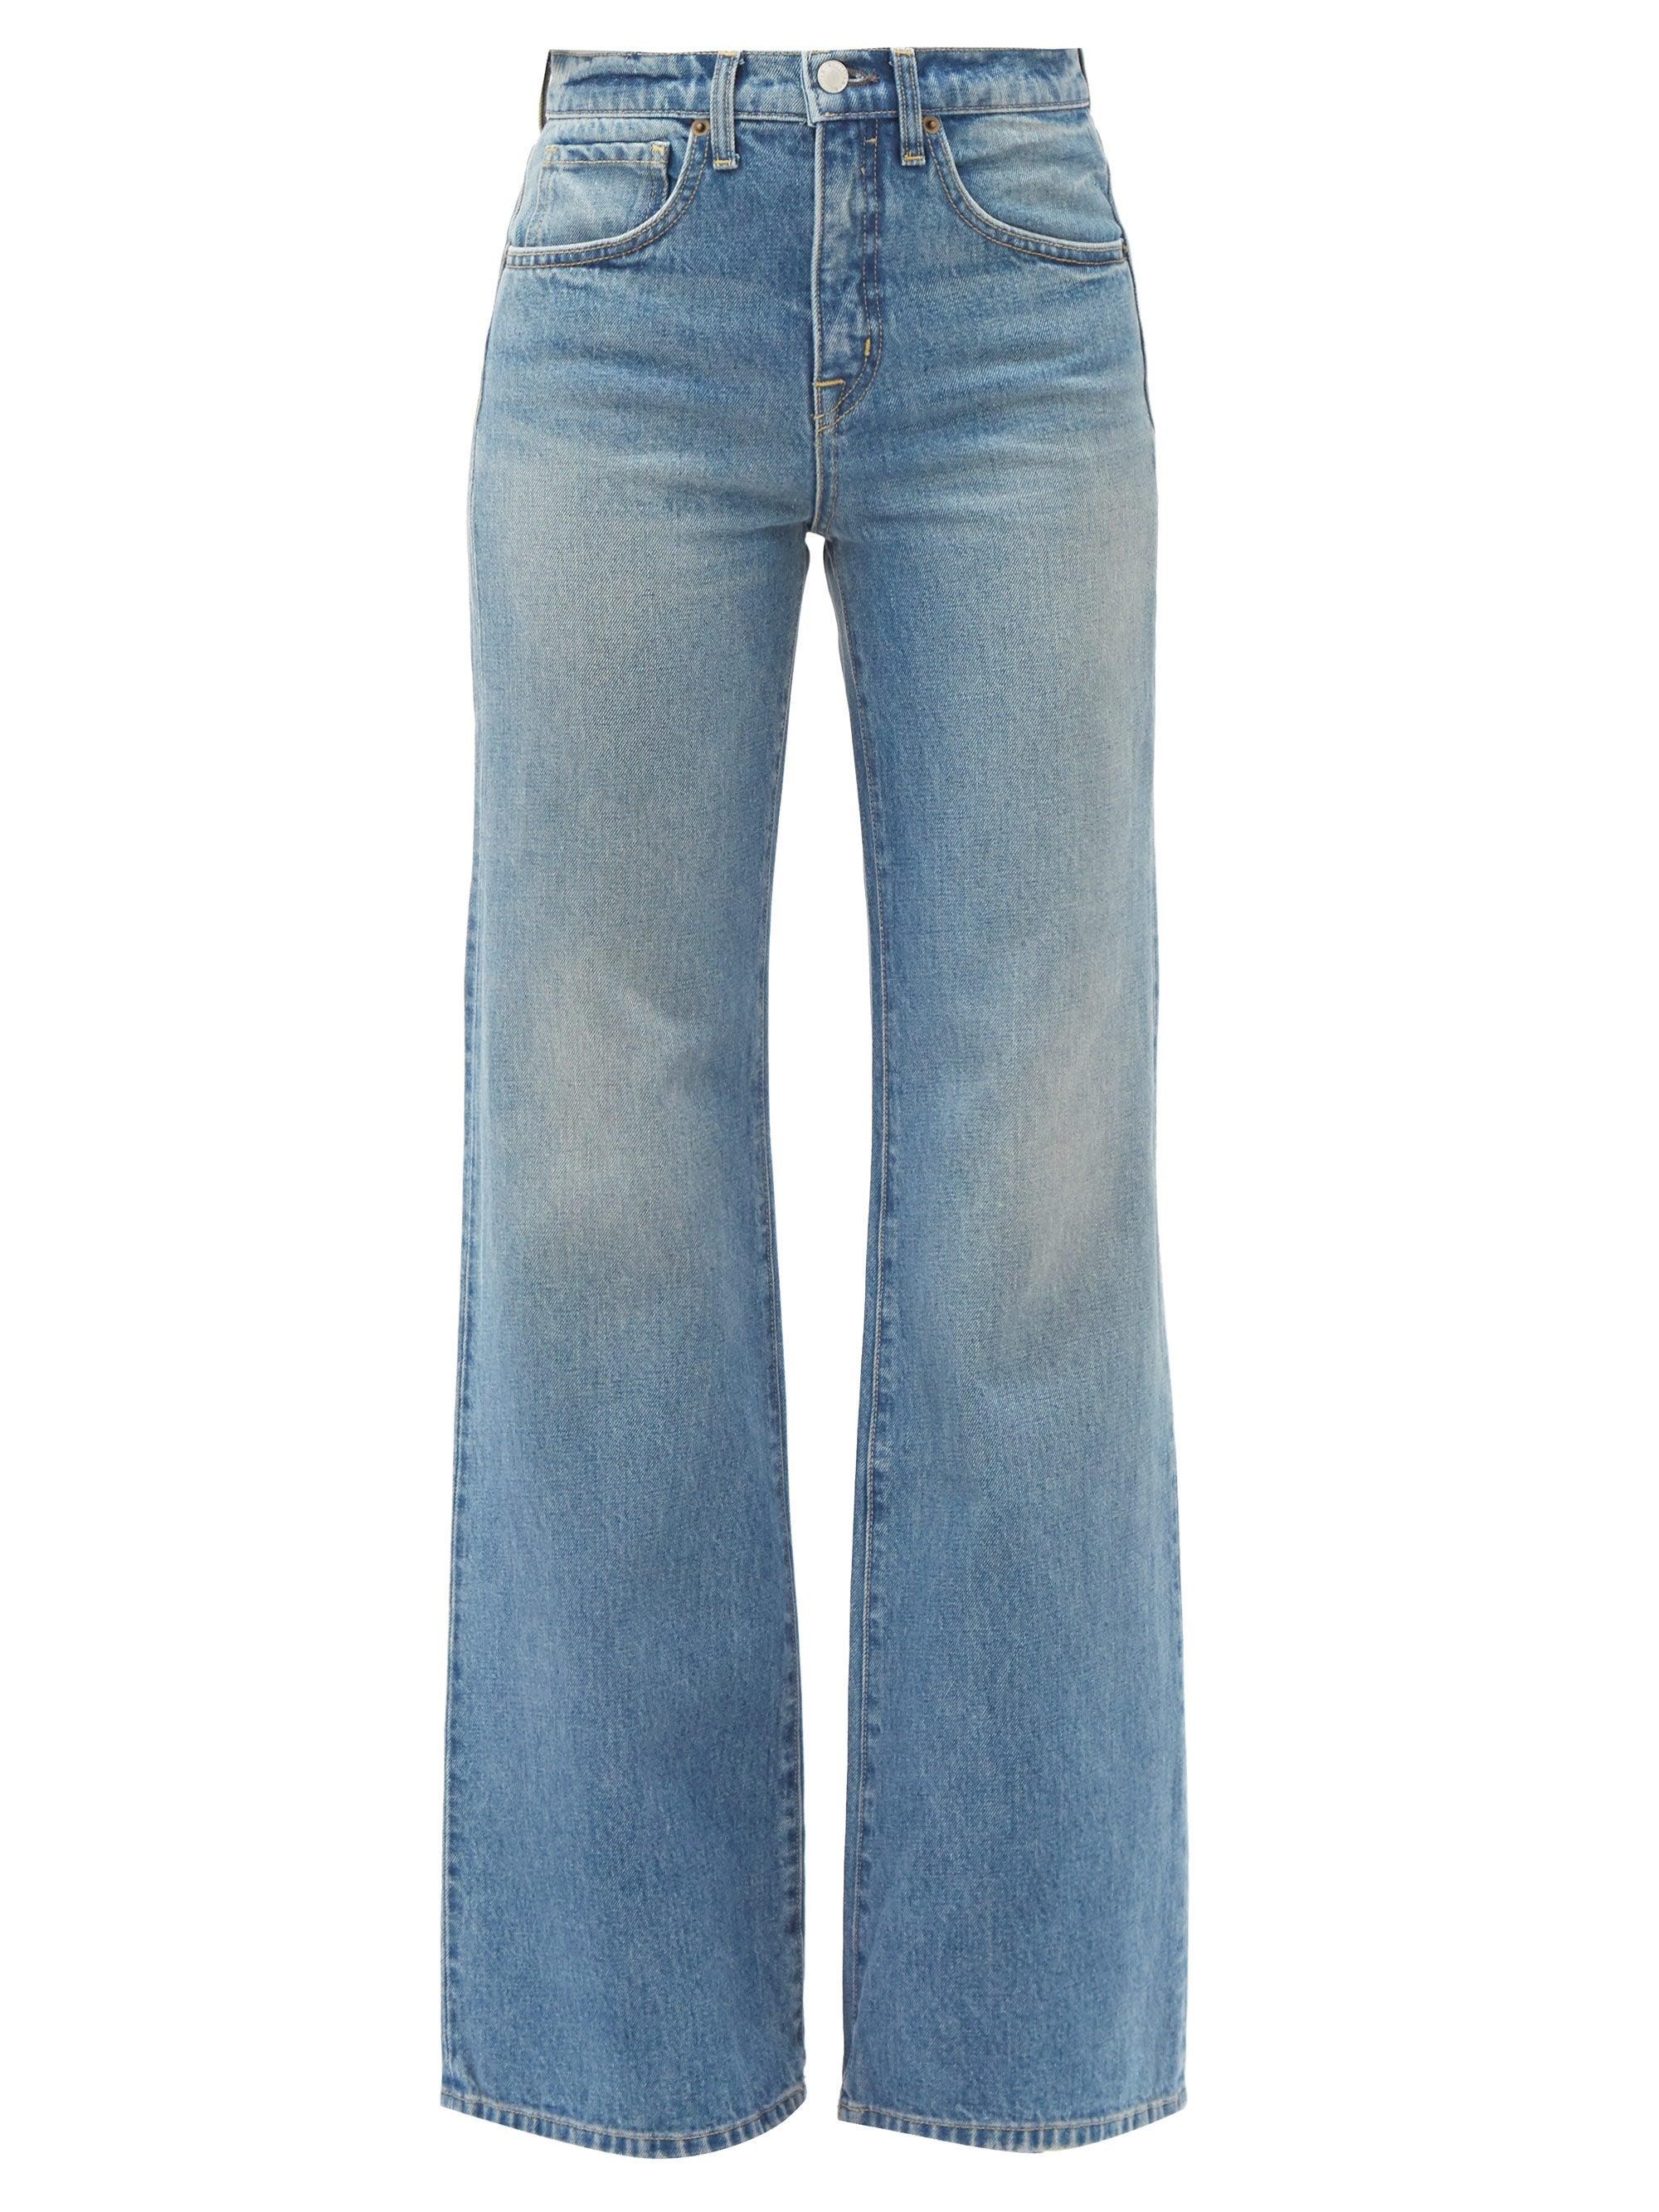 Nili Lotan Denim Celia High-rise Flared-leg Jeans in Mid Blue (Blue) - Lyst